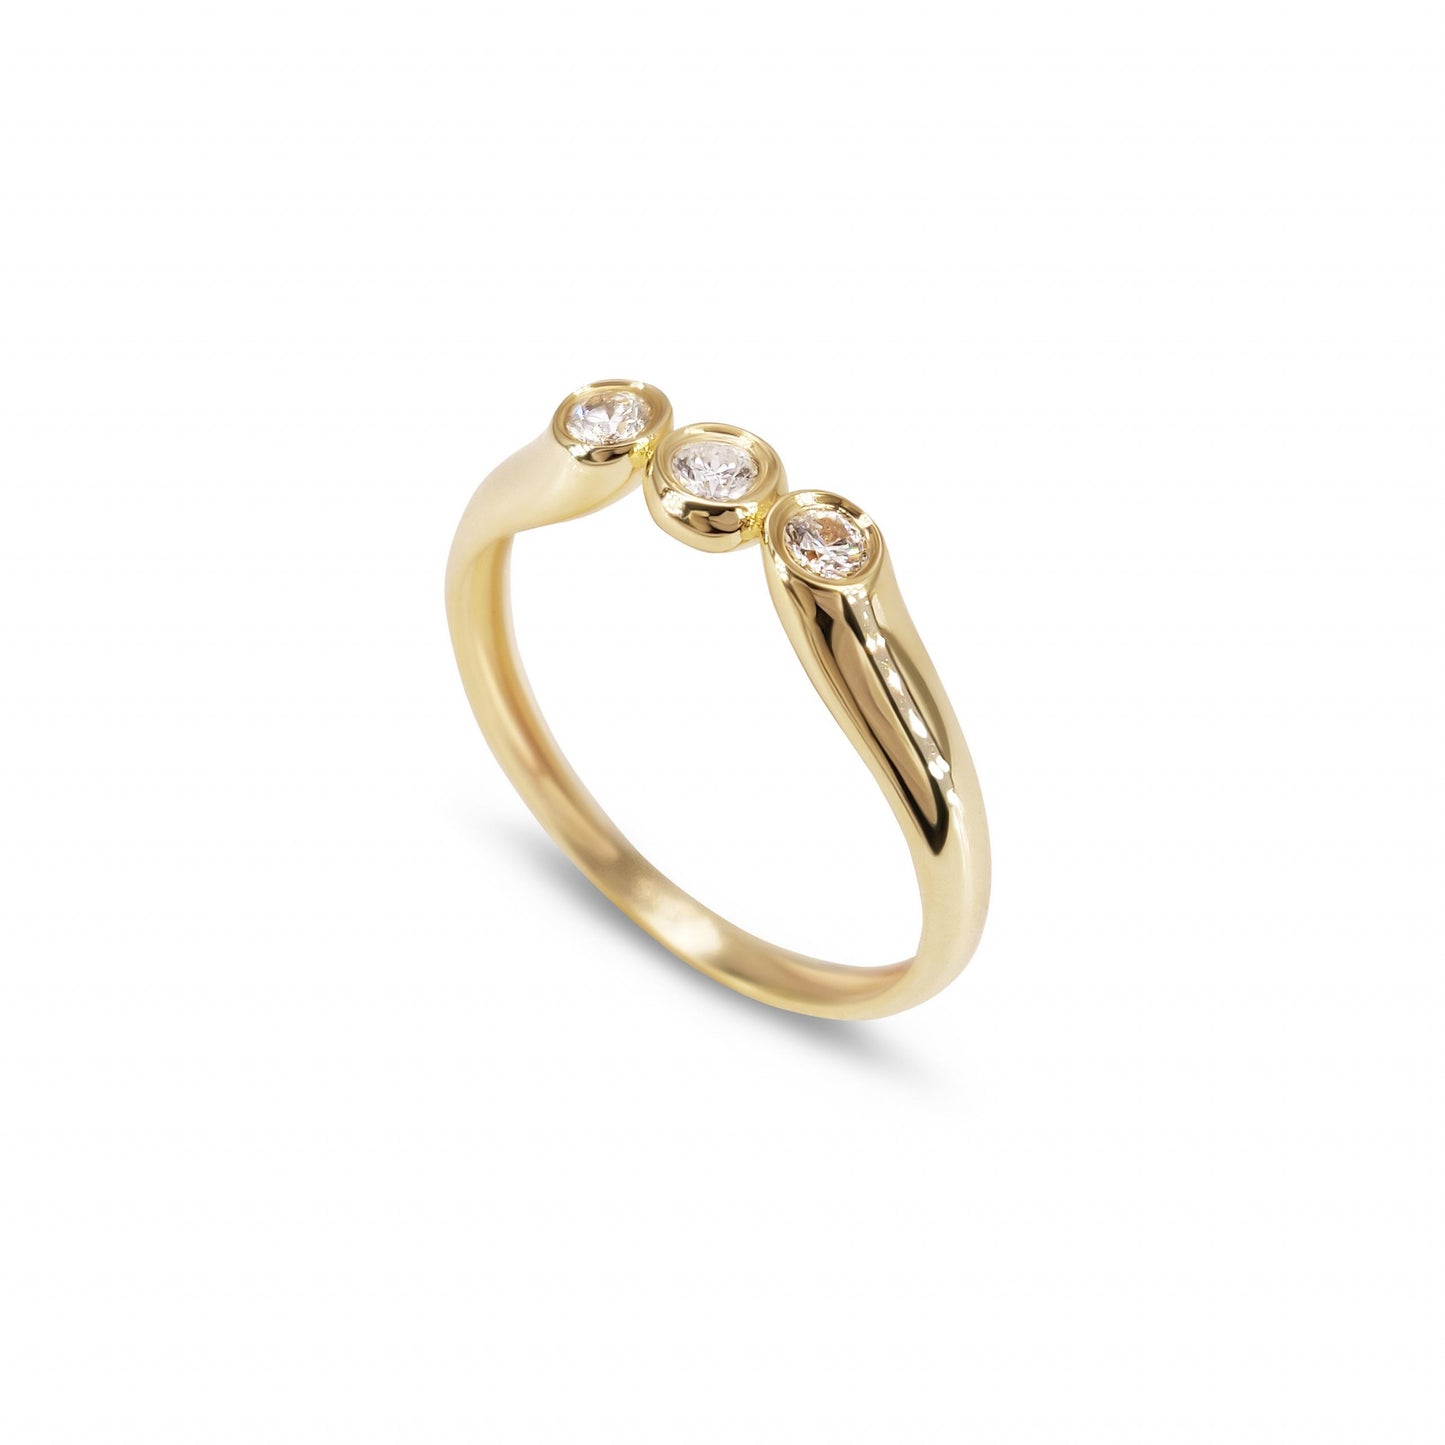 Amazing 0.06 SI2 Quality,Center Diamond , Total diamond wt. 0.18ct. 14K OR 18K Gold Bridal Engagement Wedding Anniversary Gift Ring